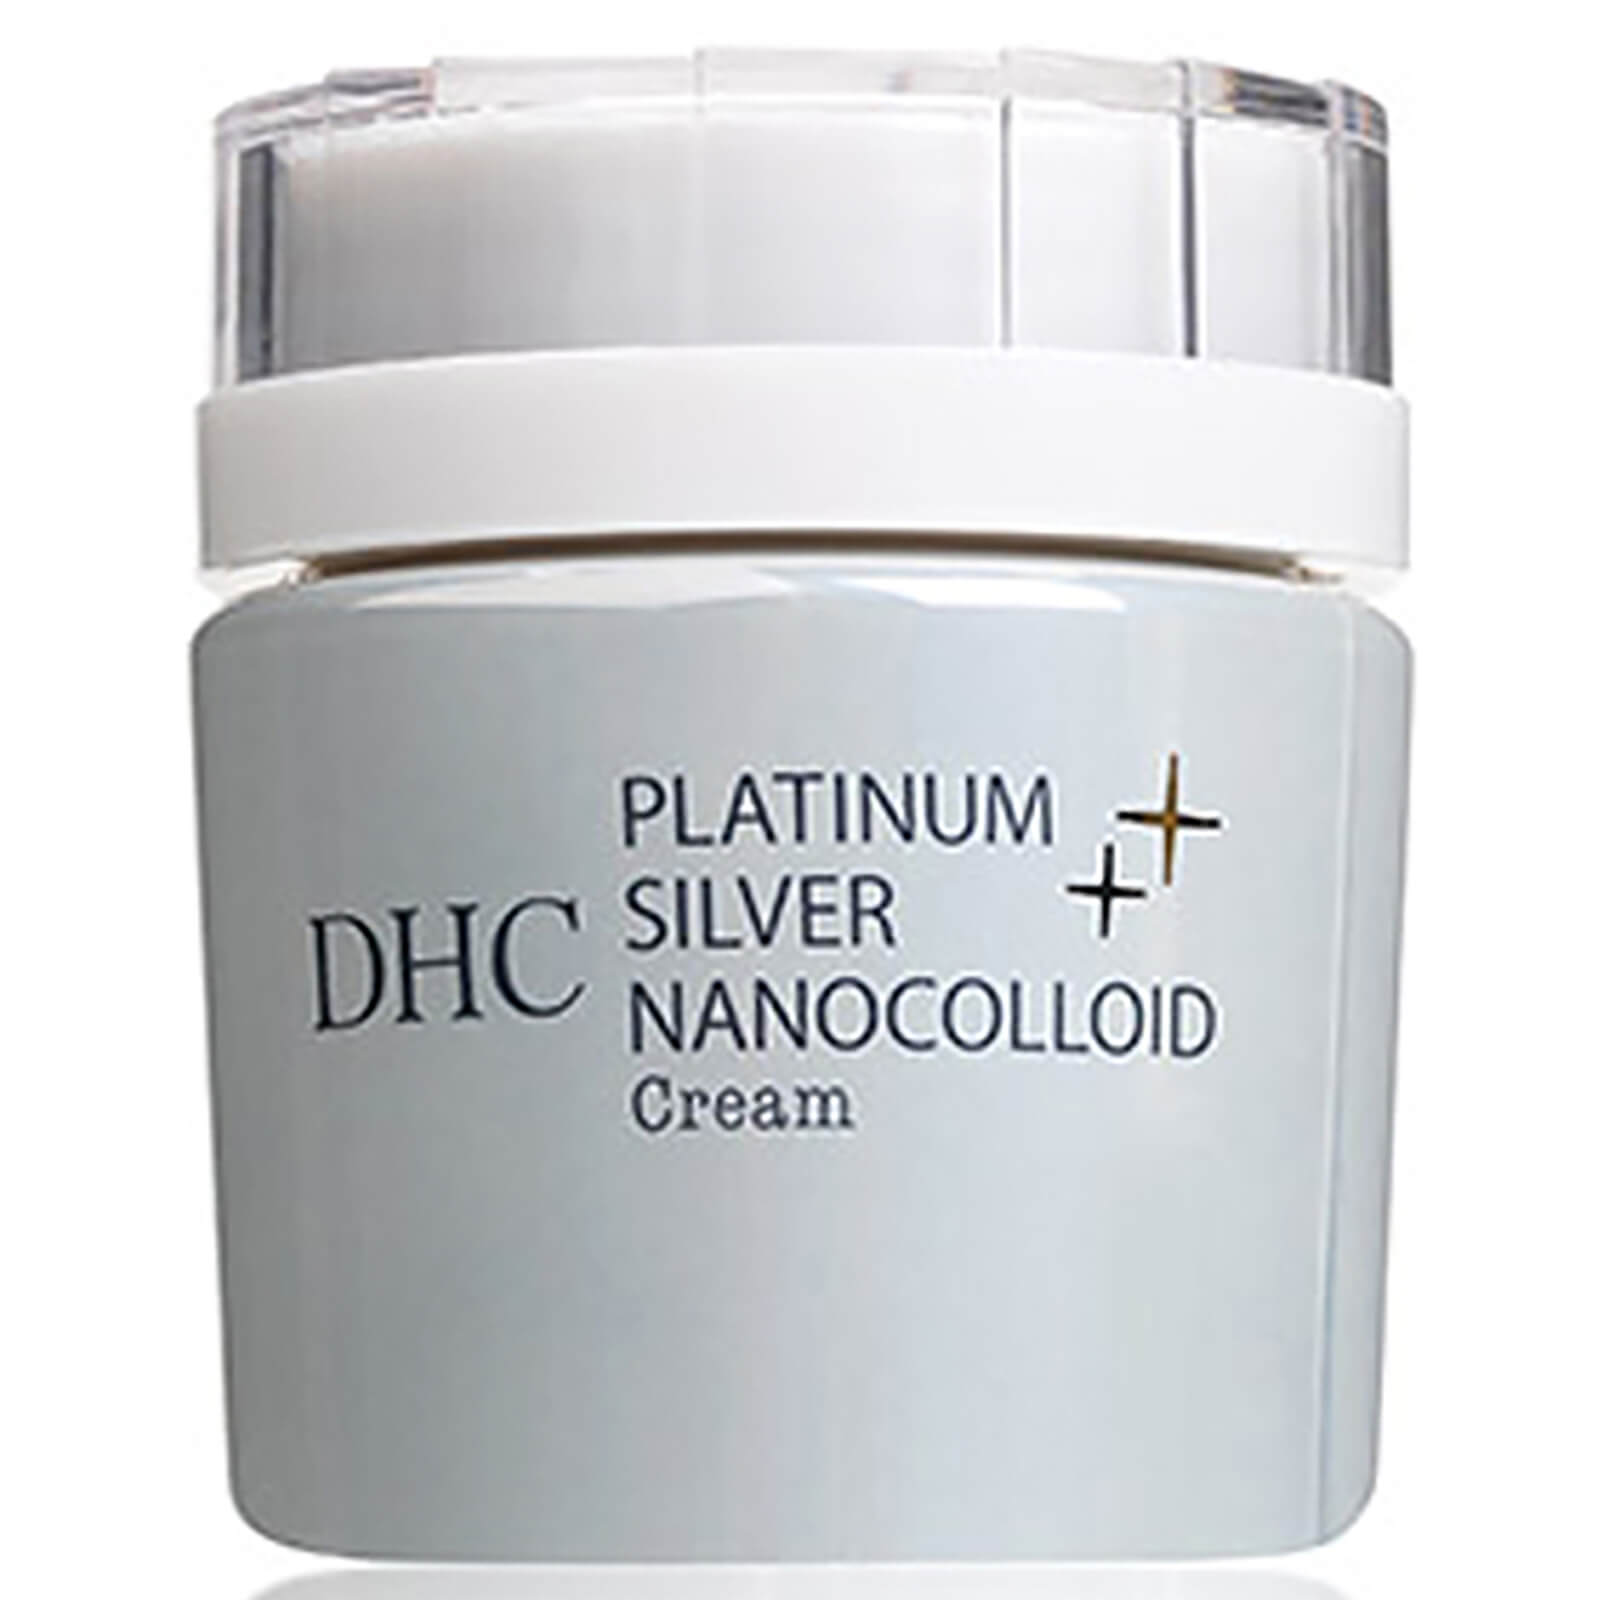 Crema Platinum Silver Nanocolloid de DHC 45 g